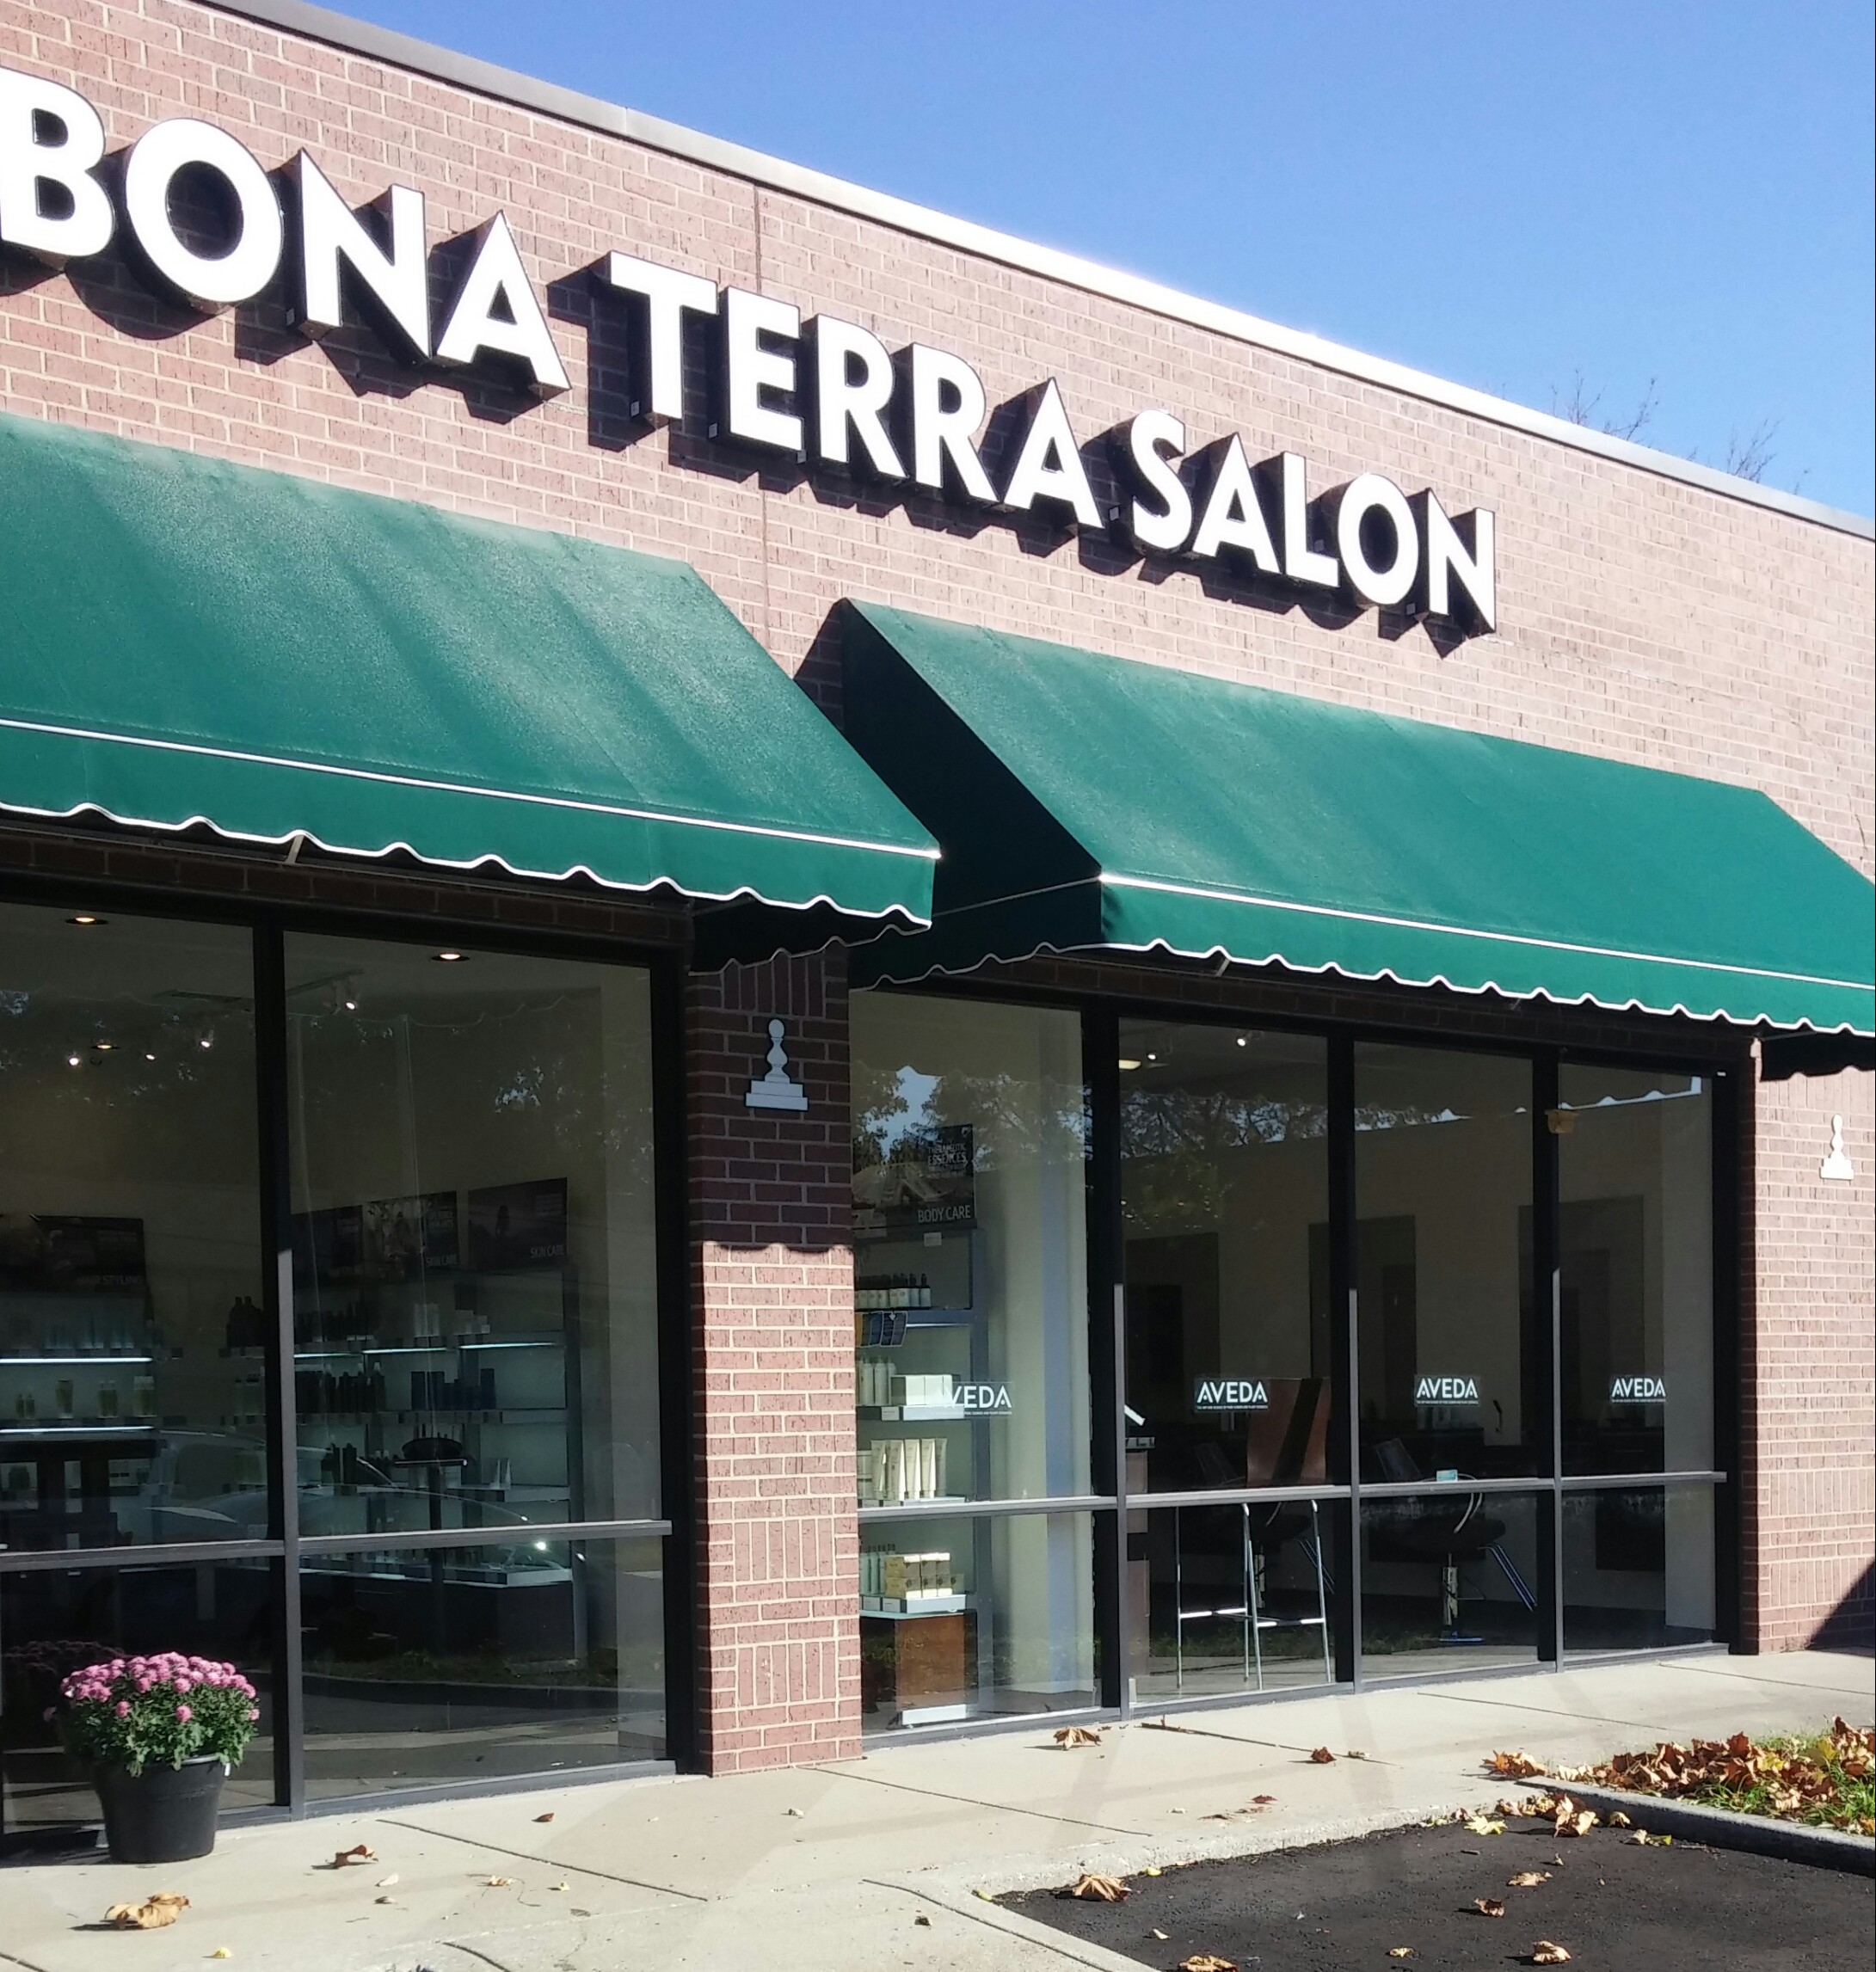 Bona Terra Salon - Brookside Kansas City Location - Bona Terra Salon